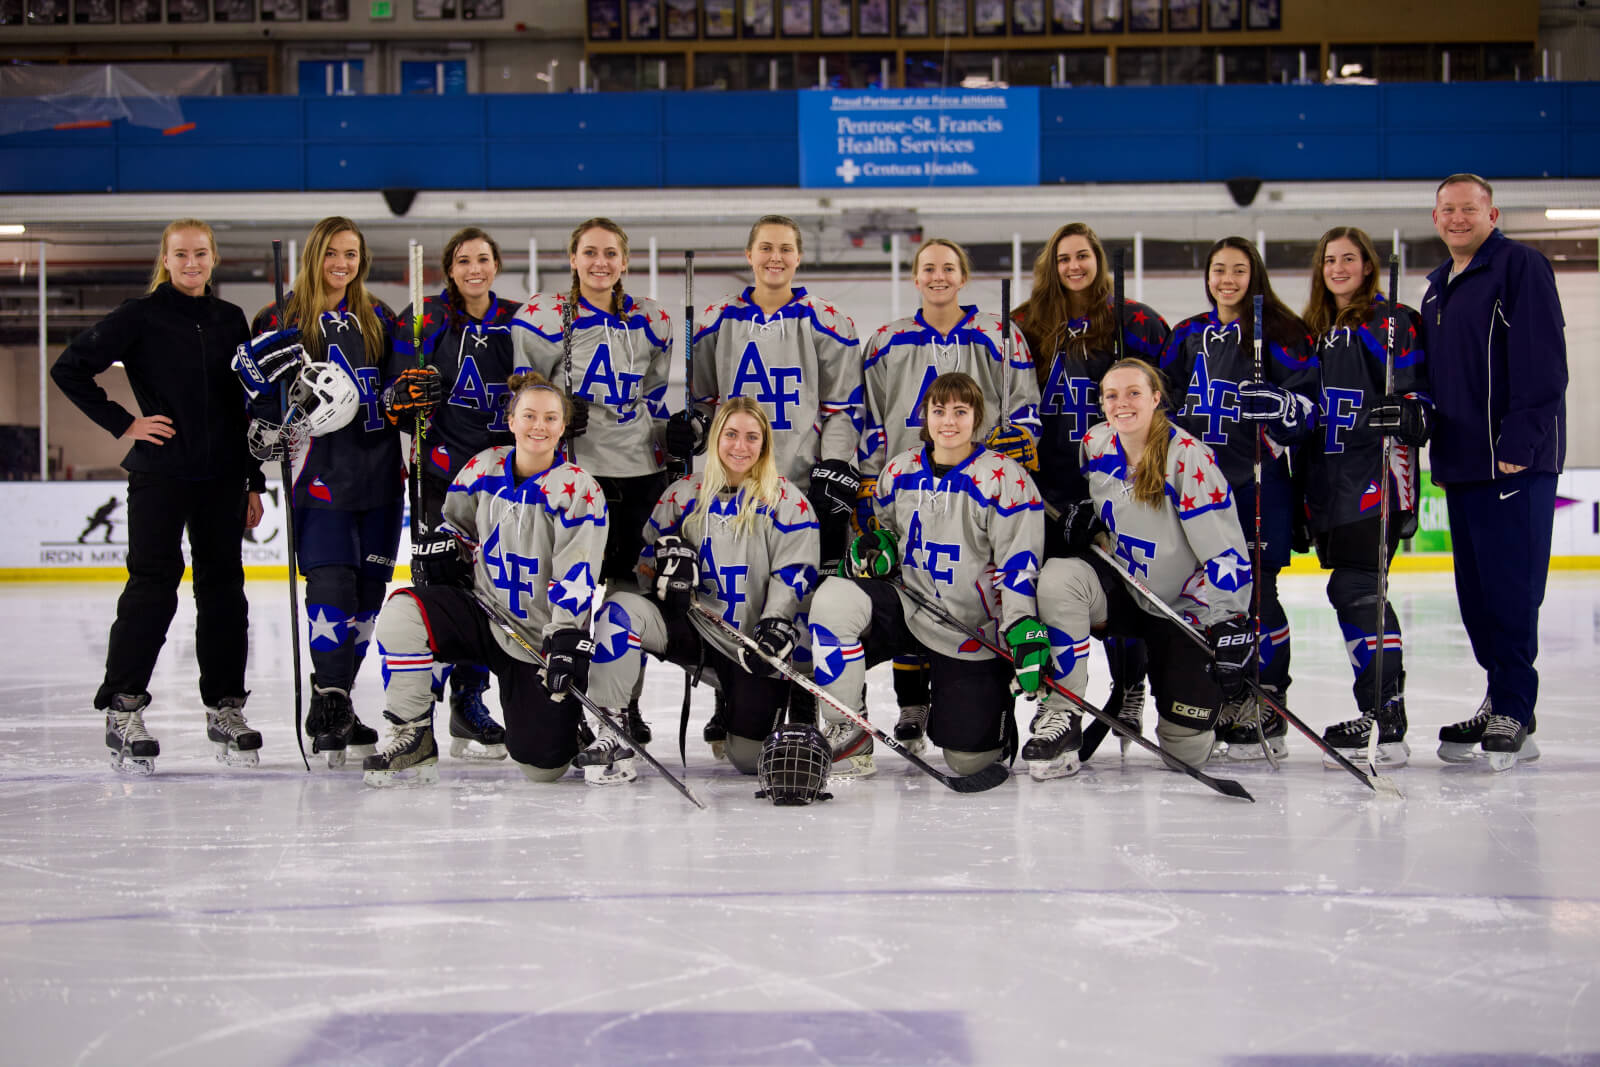 First US Air Force Academy Women's Hockey Team